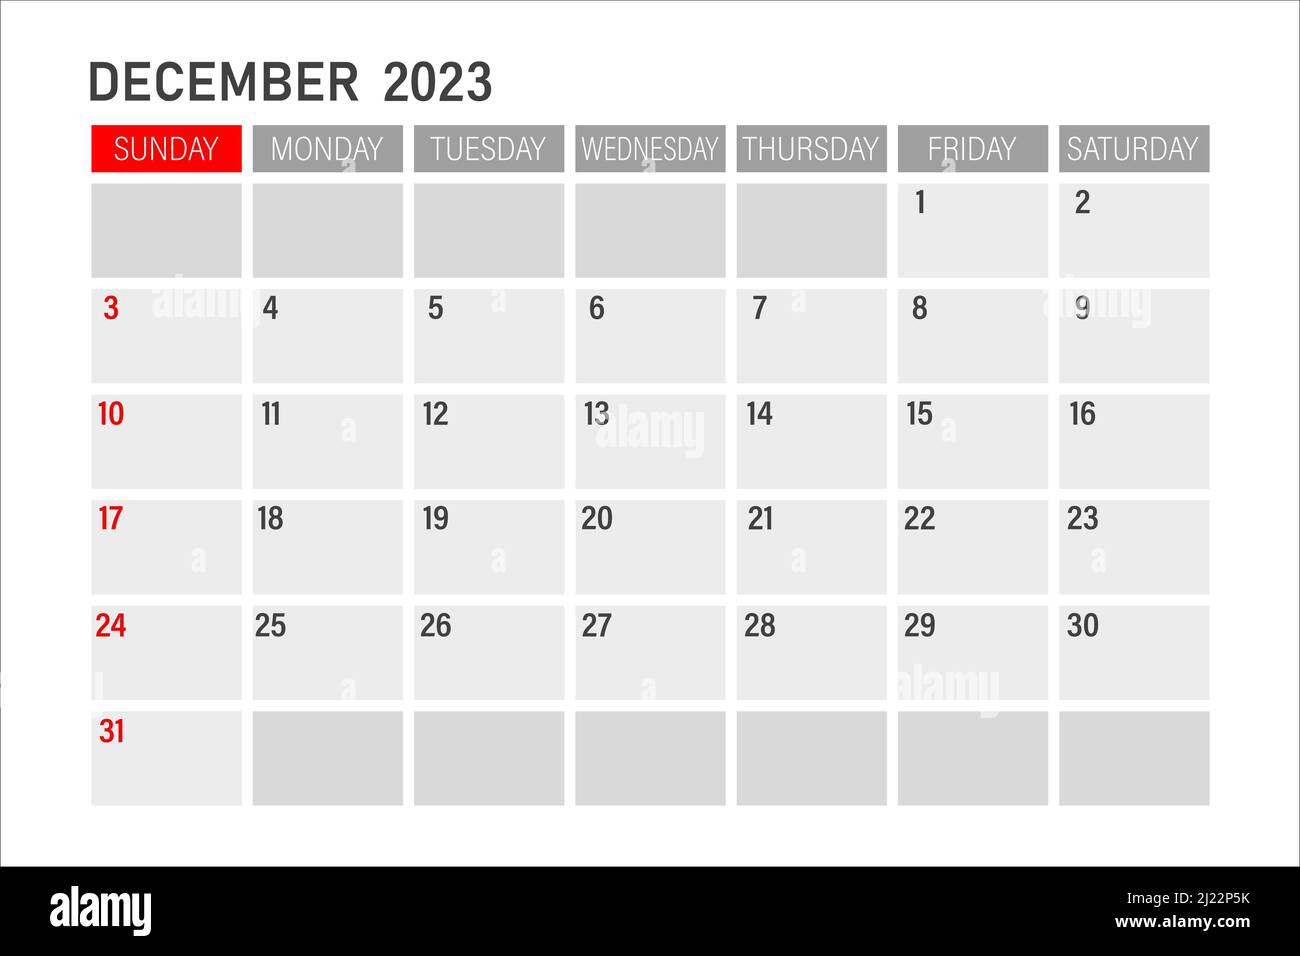 StubHub Center Monthly Calendar: December